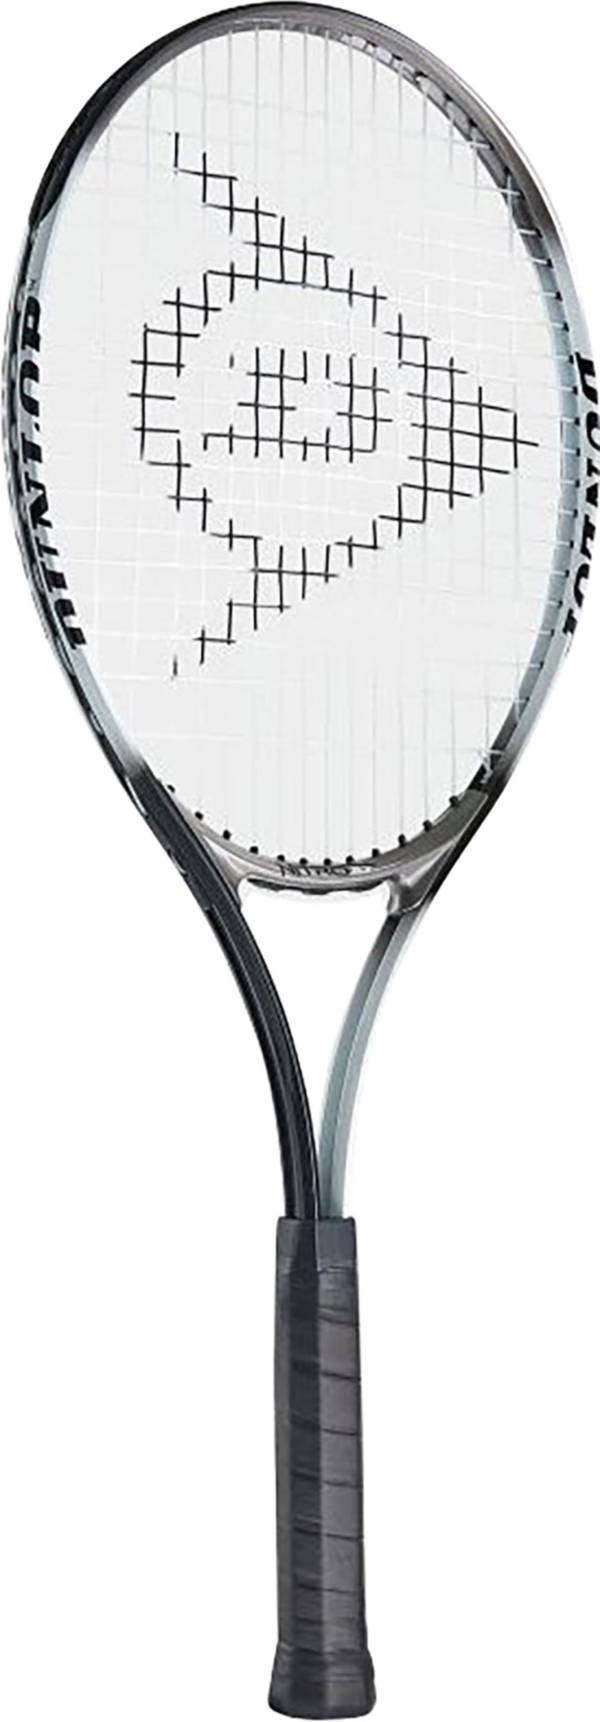 Dunlop Nitro Tennis Racquet product image